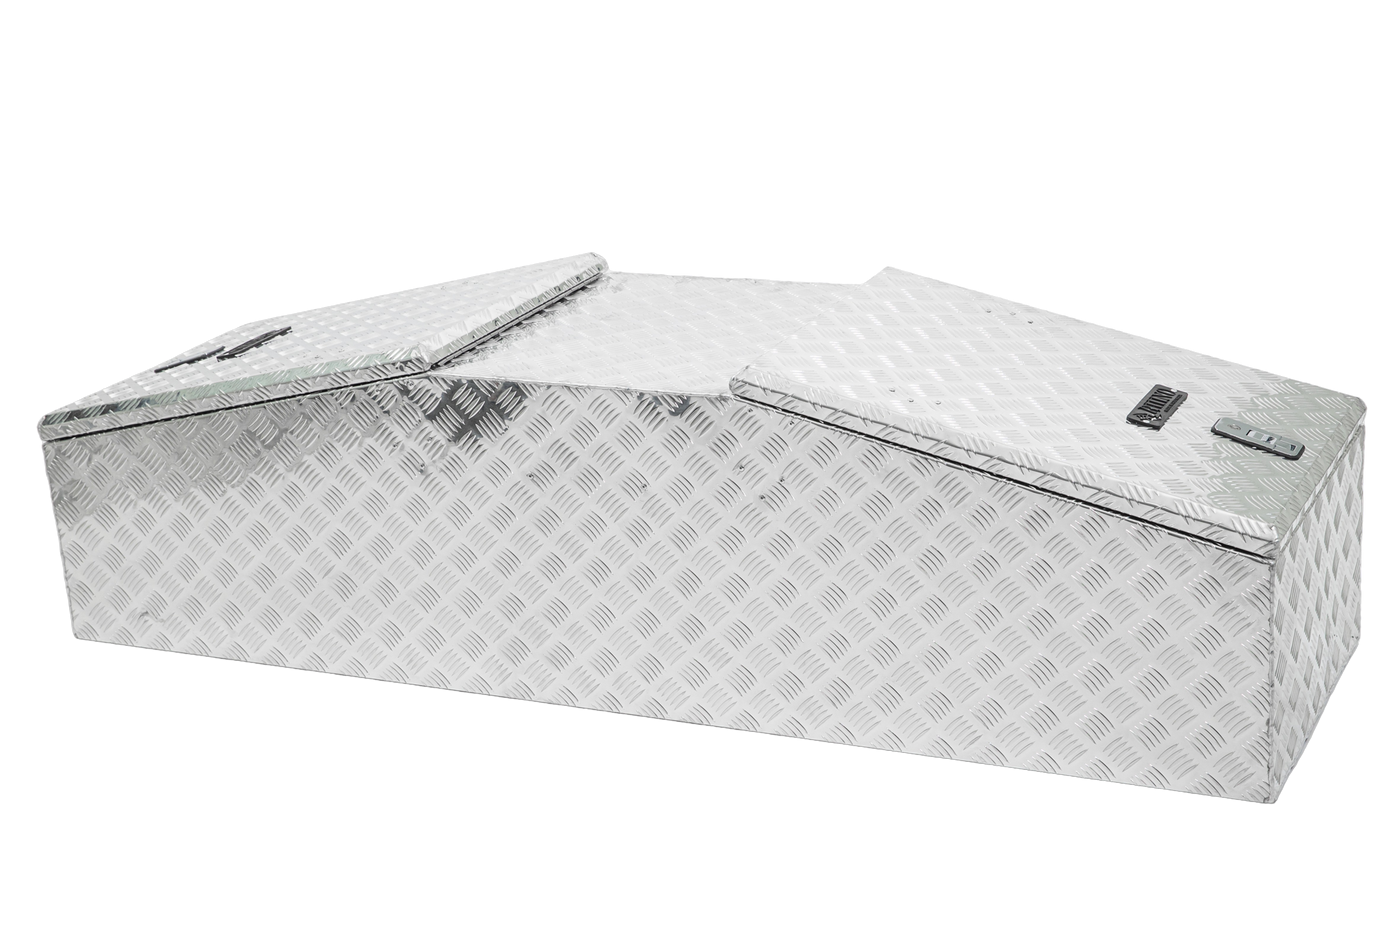 Raked Gull Wing Checker Plate Aluminium Tool Box with Compression Locks Isometric View